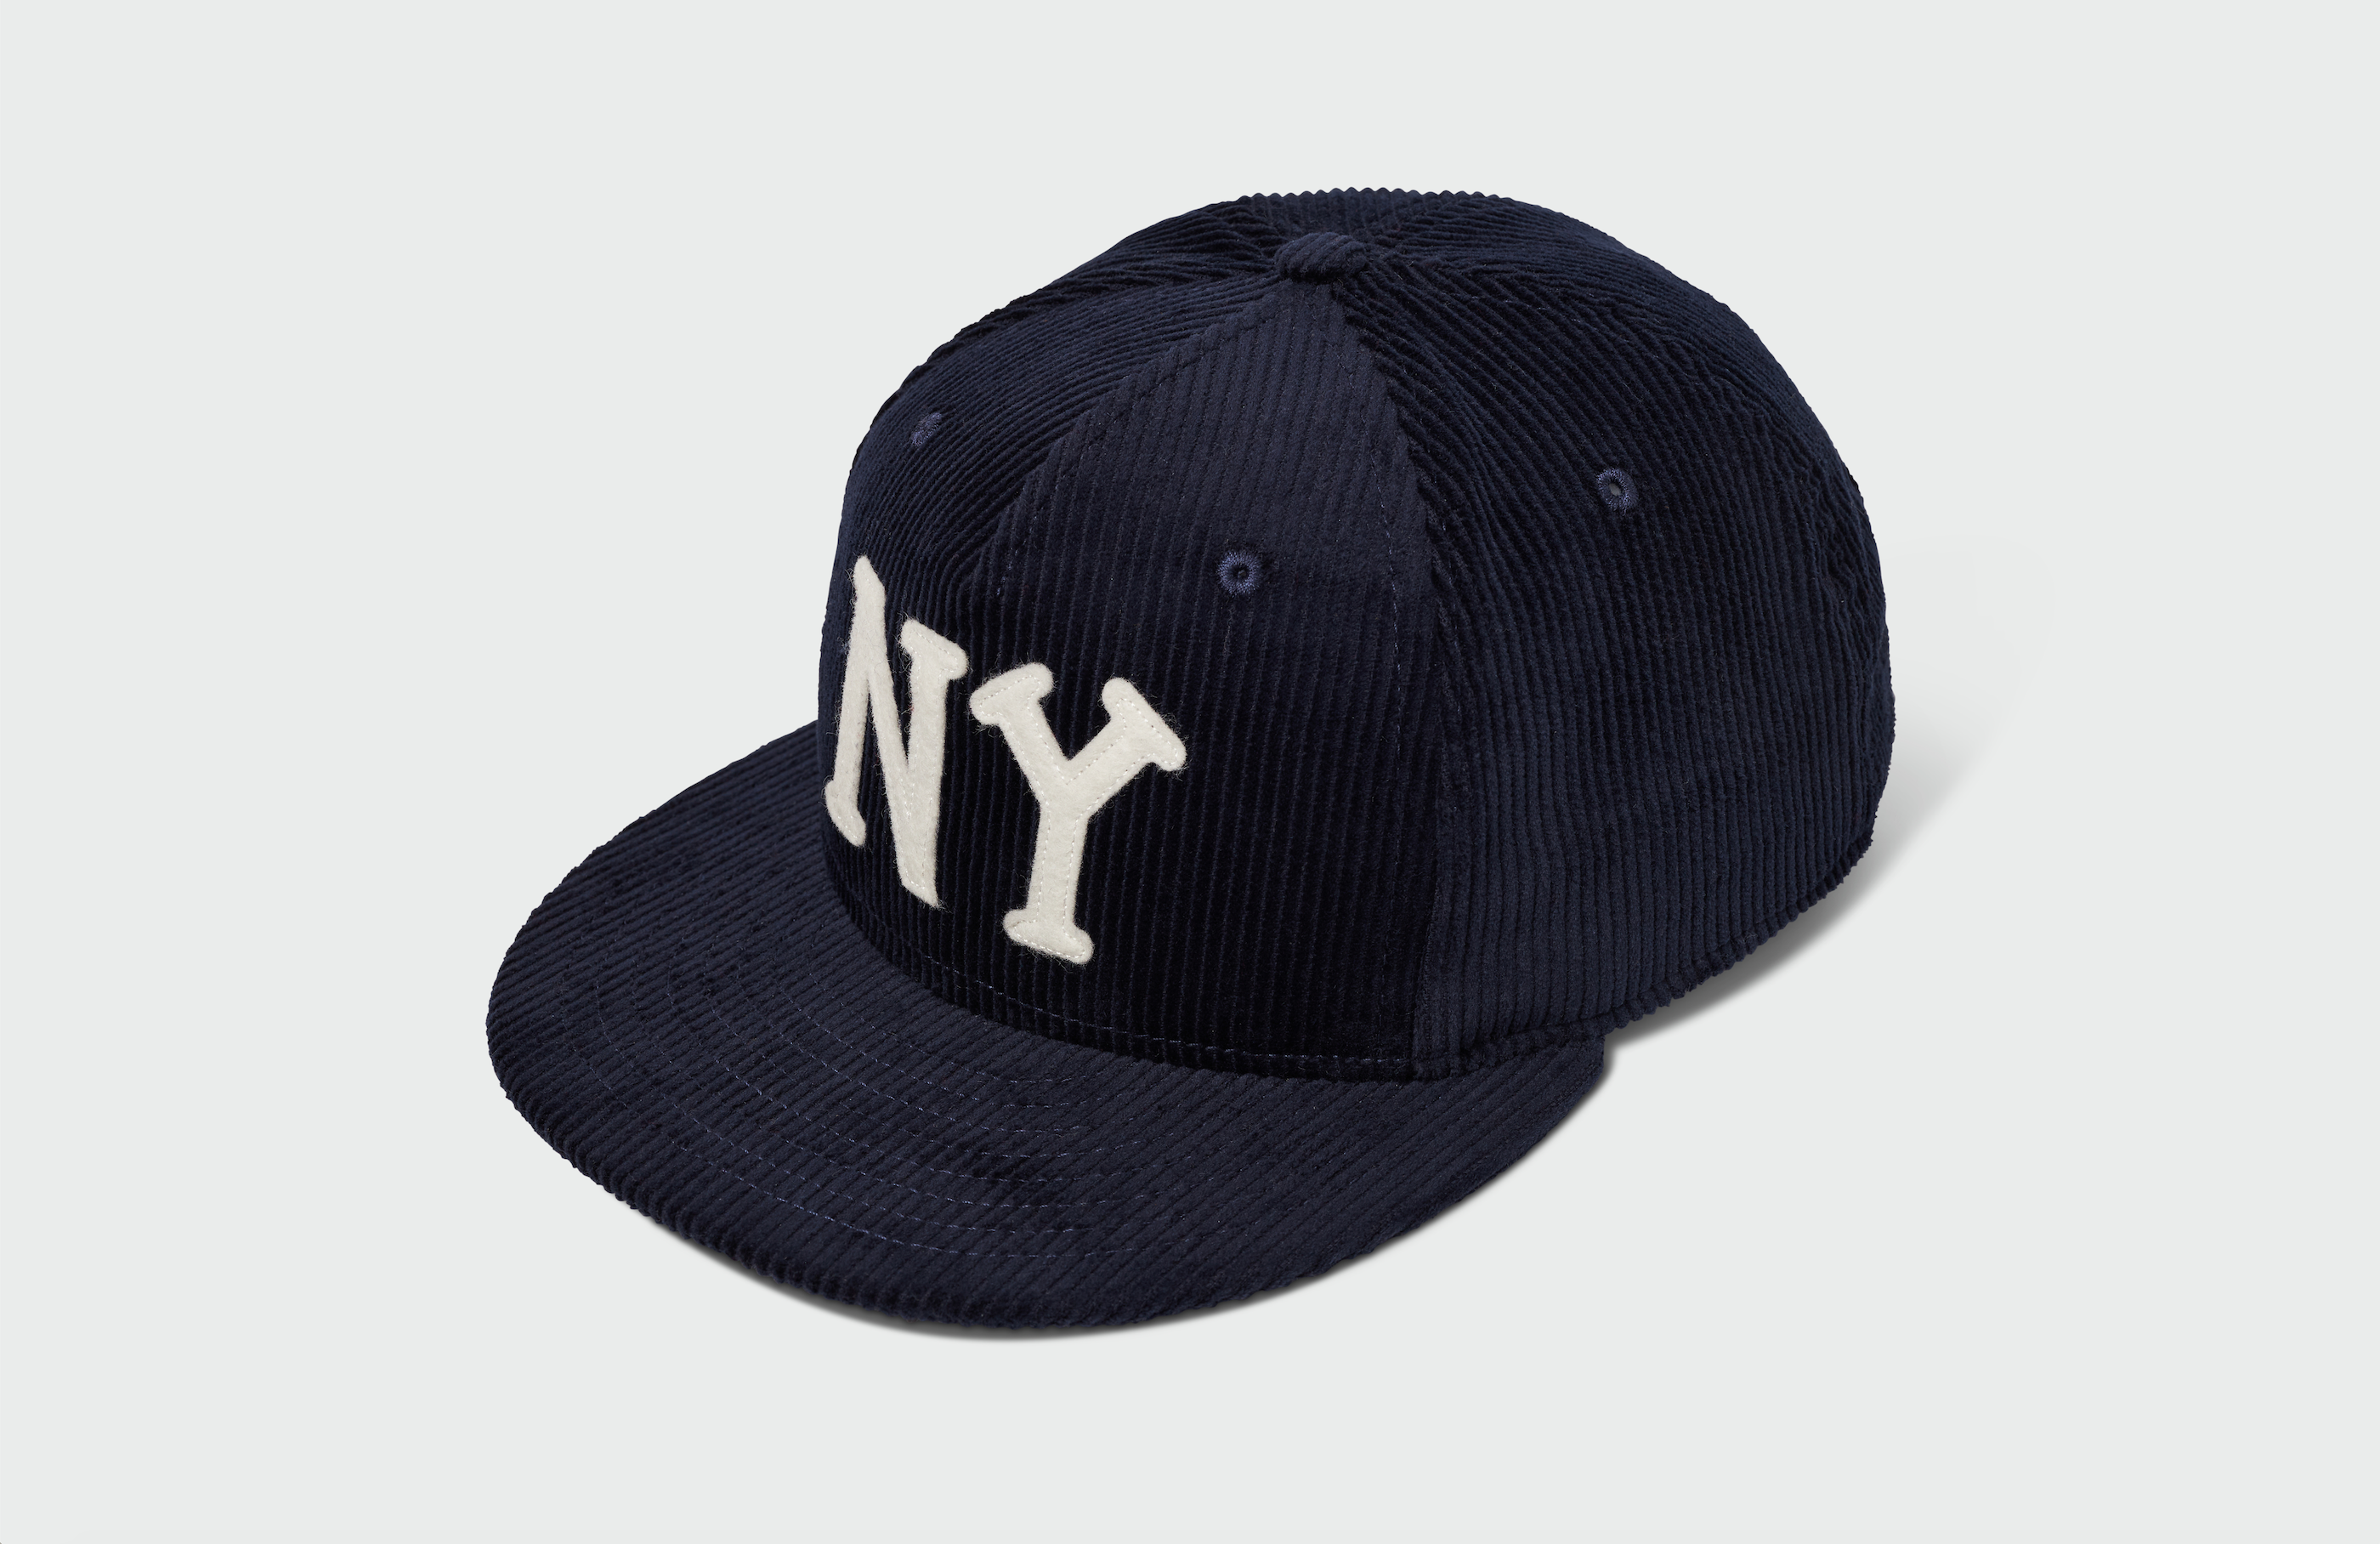 Vintage New York Yankees AJD Corduroy Snapback Baseball Hat